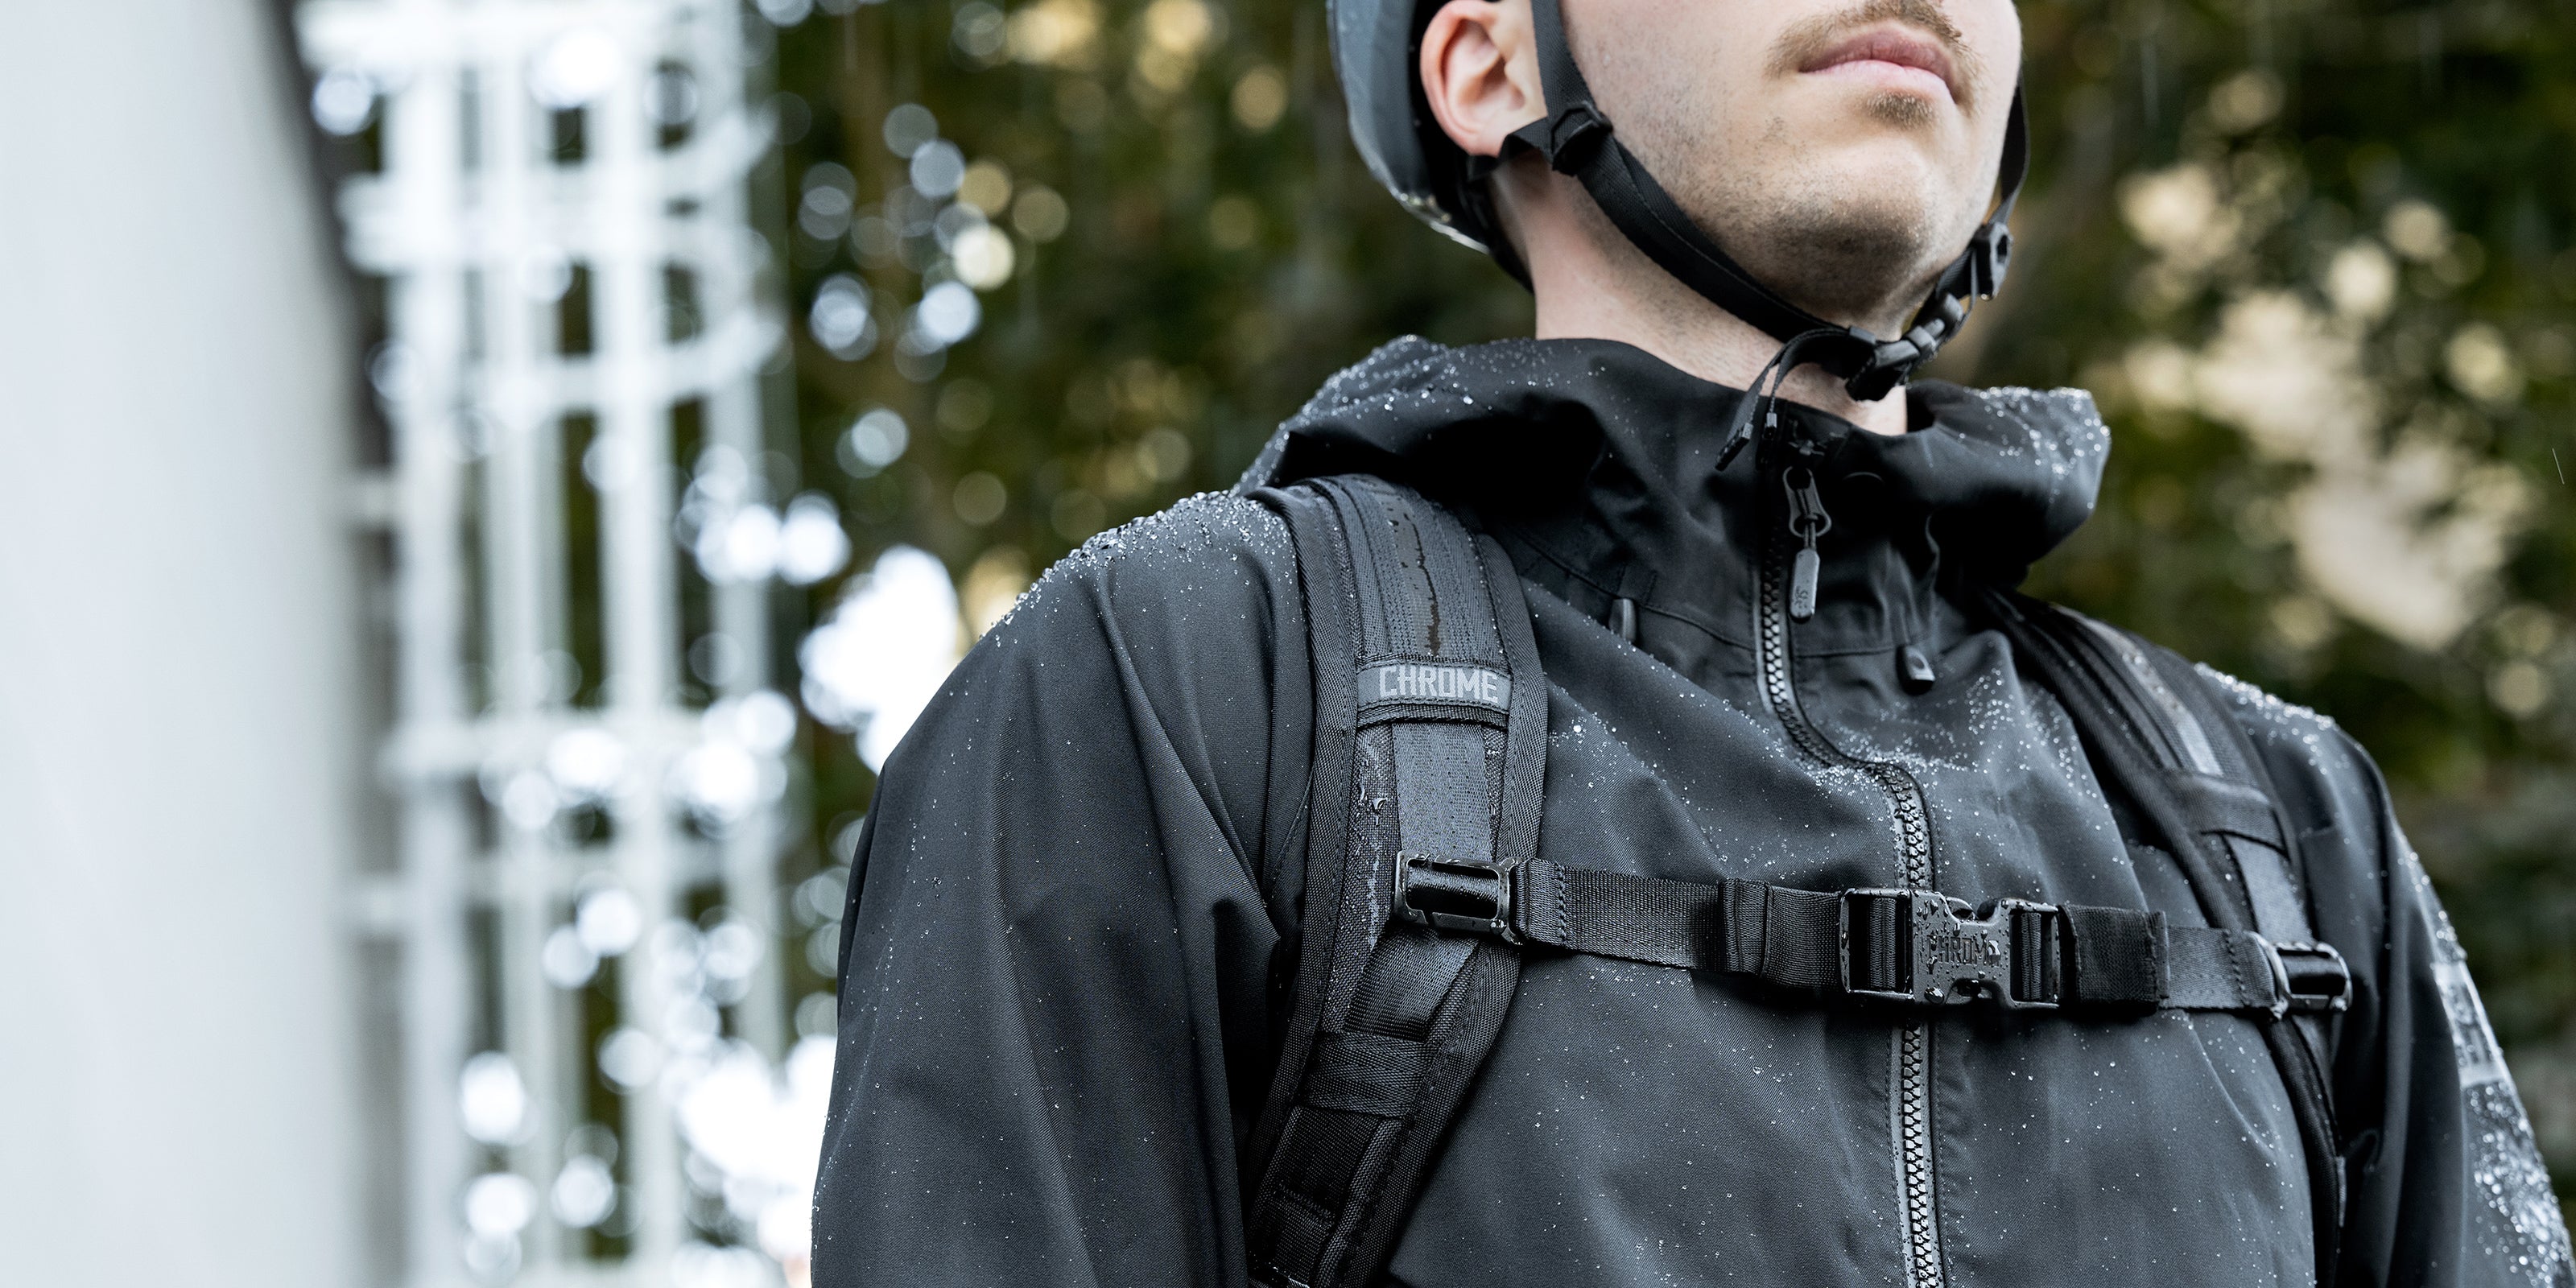 Men's Storm Salute Commute Jacket worn by a guy desktop image